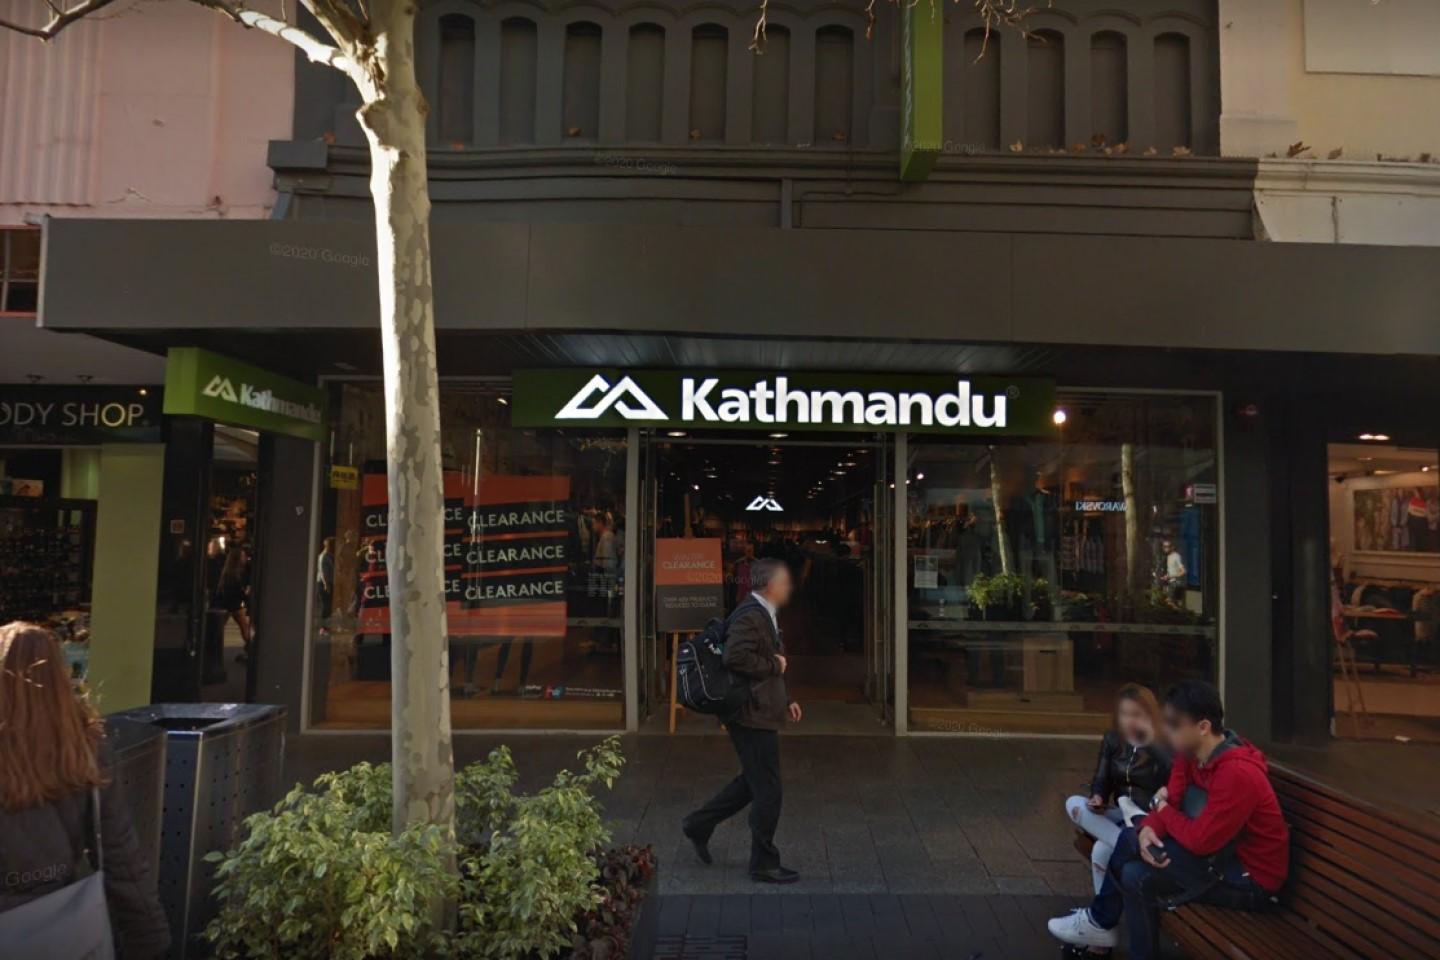 Kathmandu cautious despite sales recovery